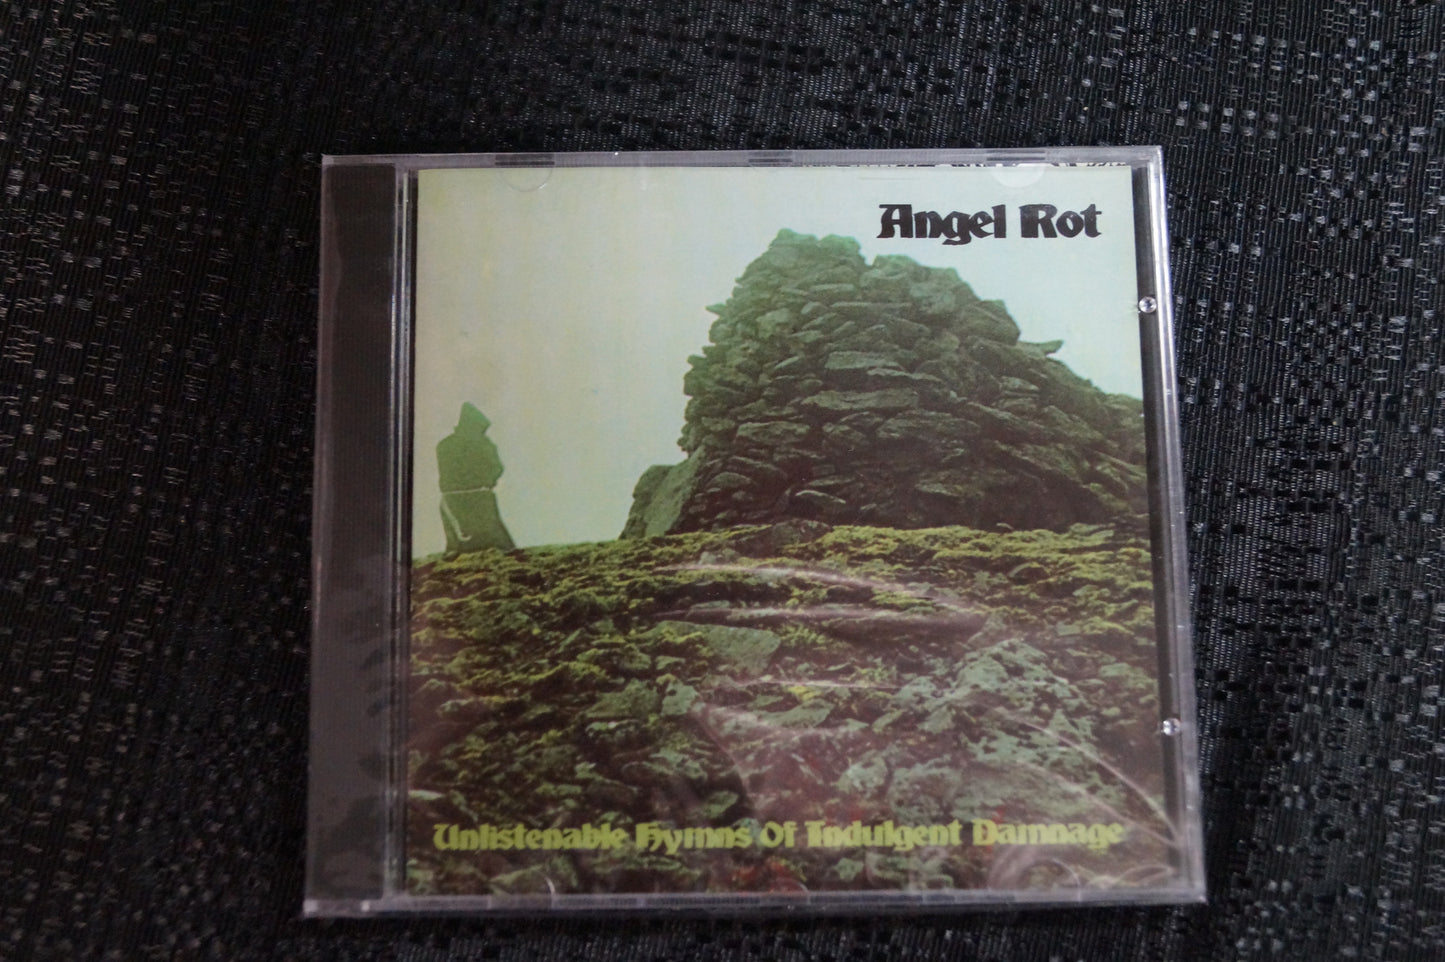 Angel Rot "Unlistenable Hyms of Indulgent Damage" 1999 CD Art By Kozik